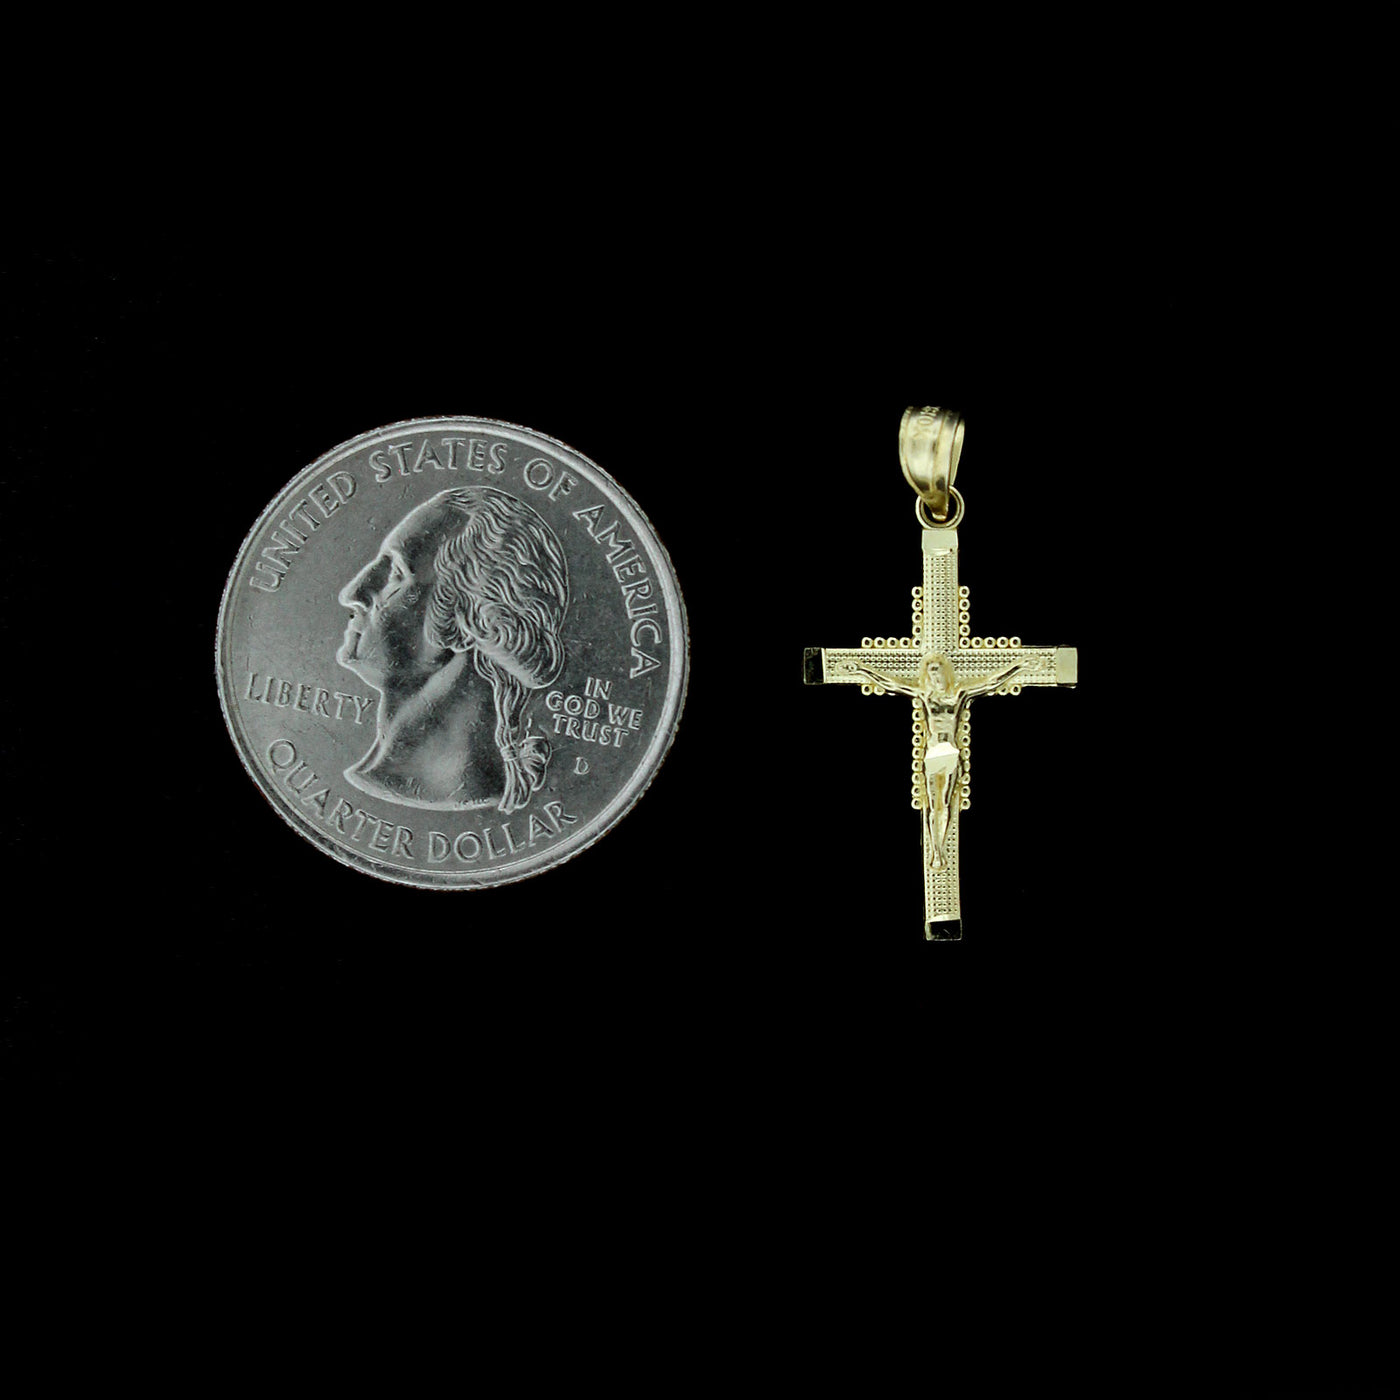 Real 10K Yellow Gold Diamond Cut Jesus Crucifix Cross Charm Pendant & Rope Chain Necklace Set